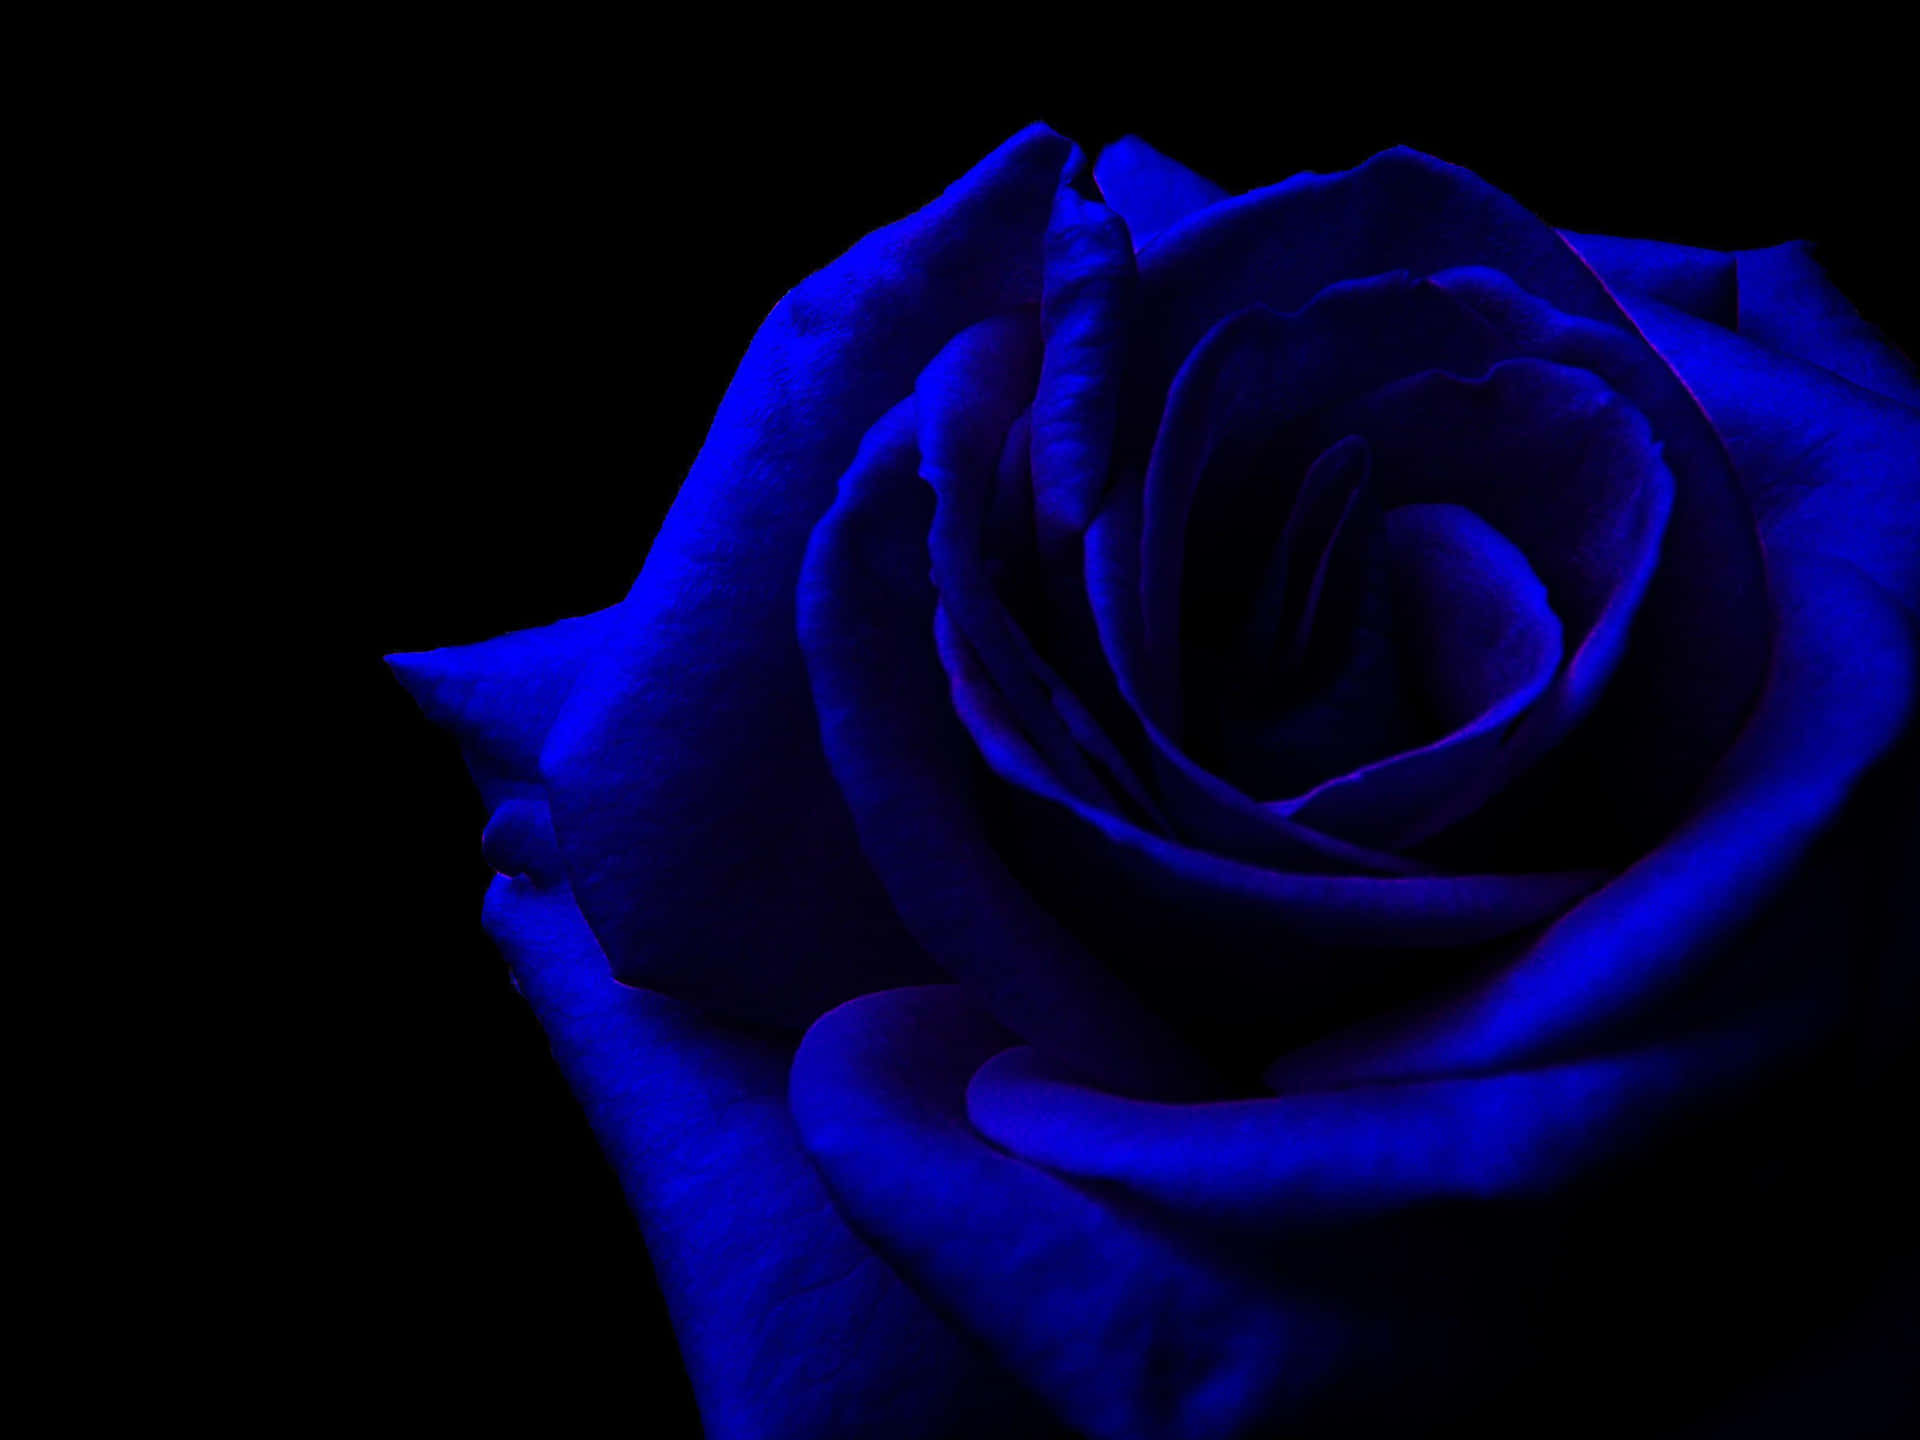 A Blue Rose On A Black Background